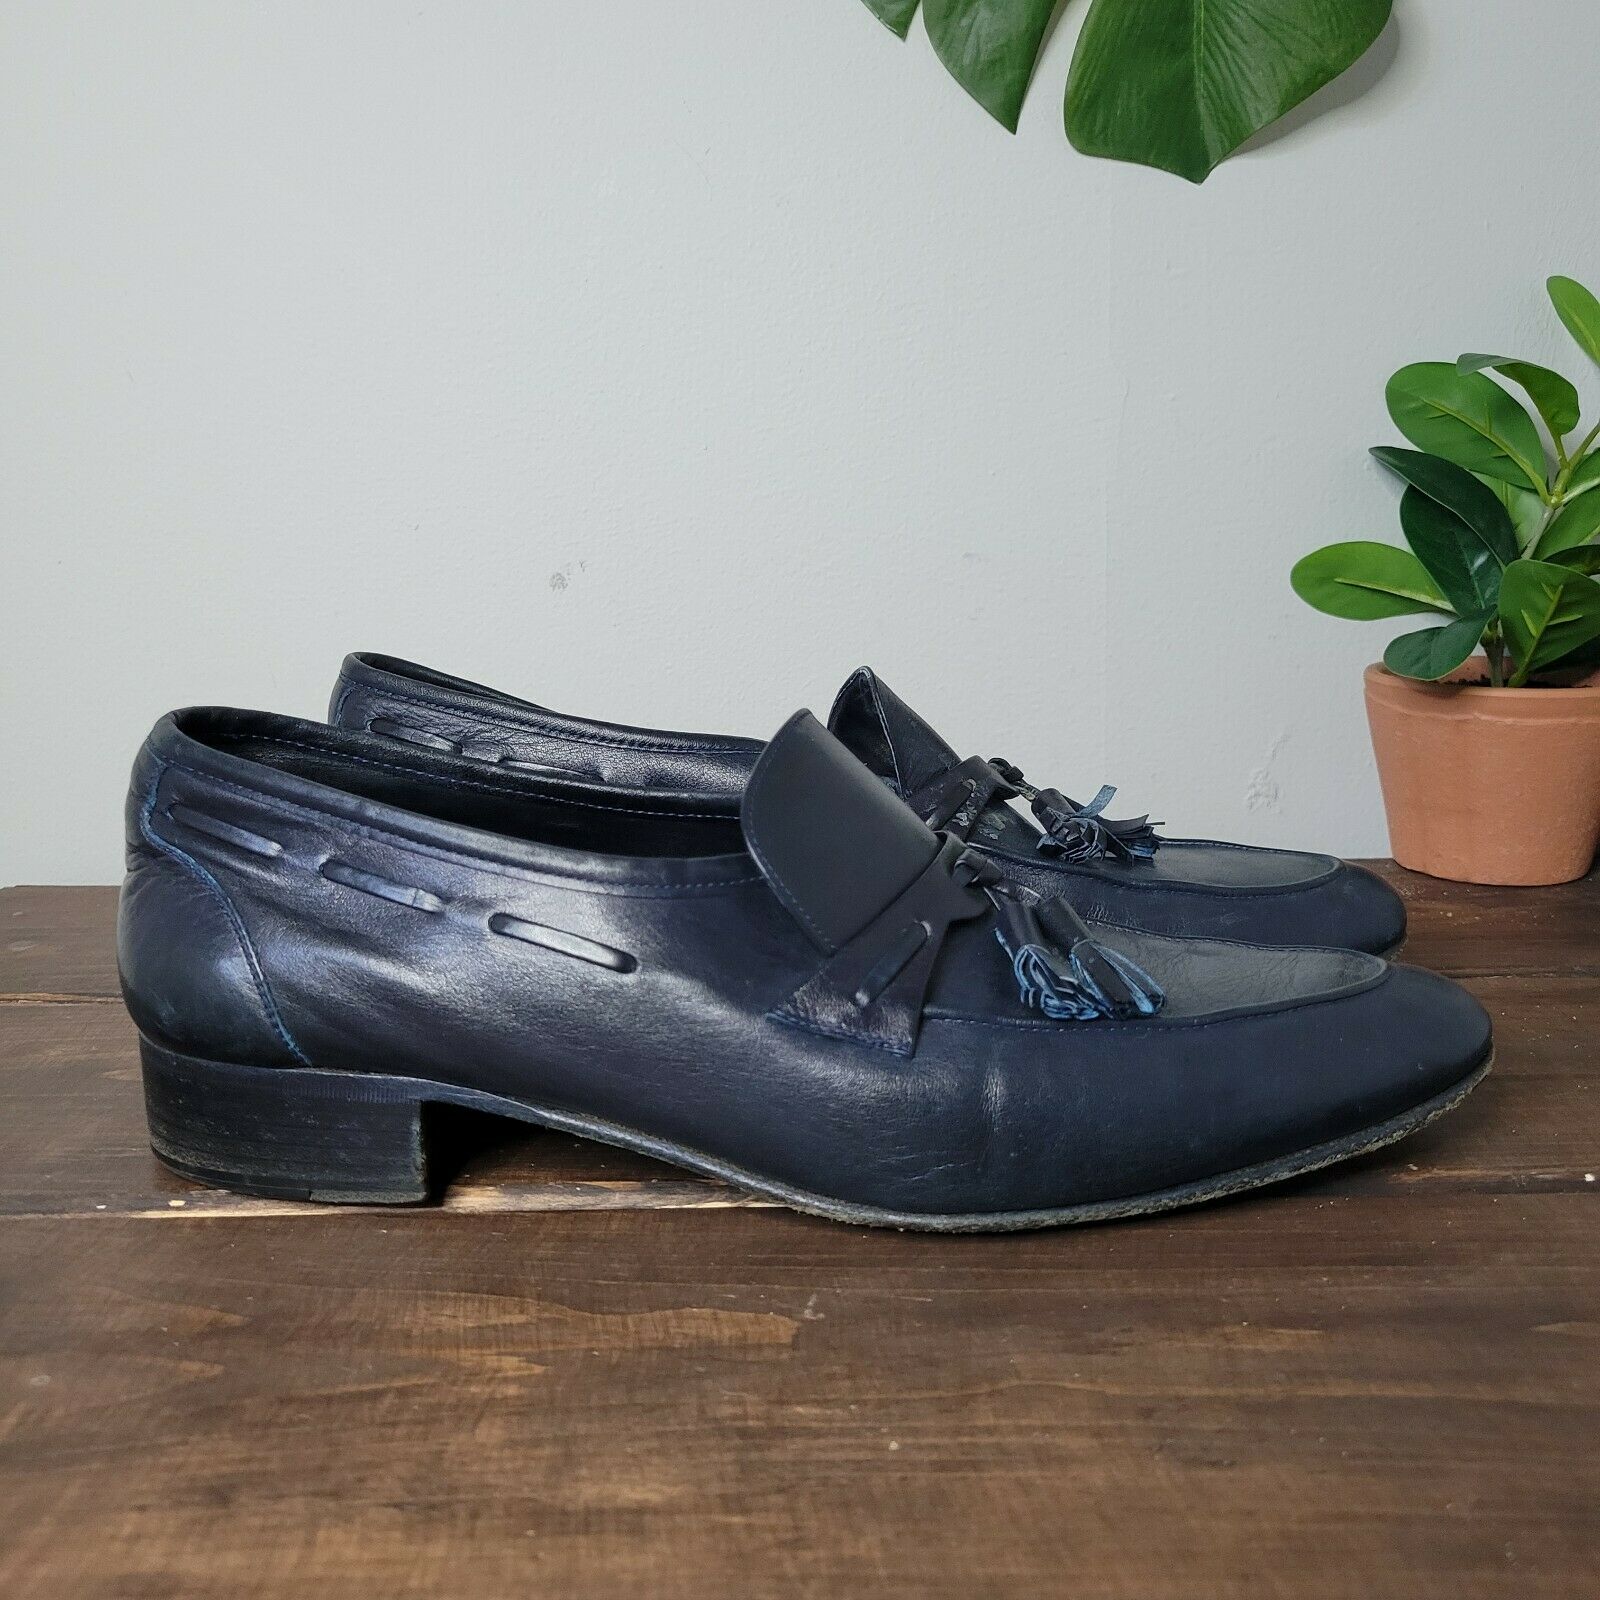 Bally Dress Shoes Tassles Leather Oxfords Navy Blue Mens Sz 10.5 M